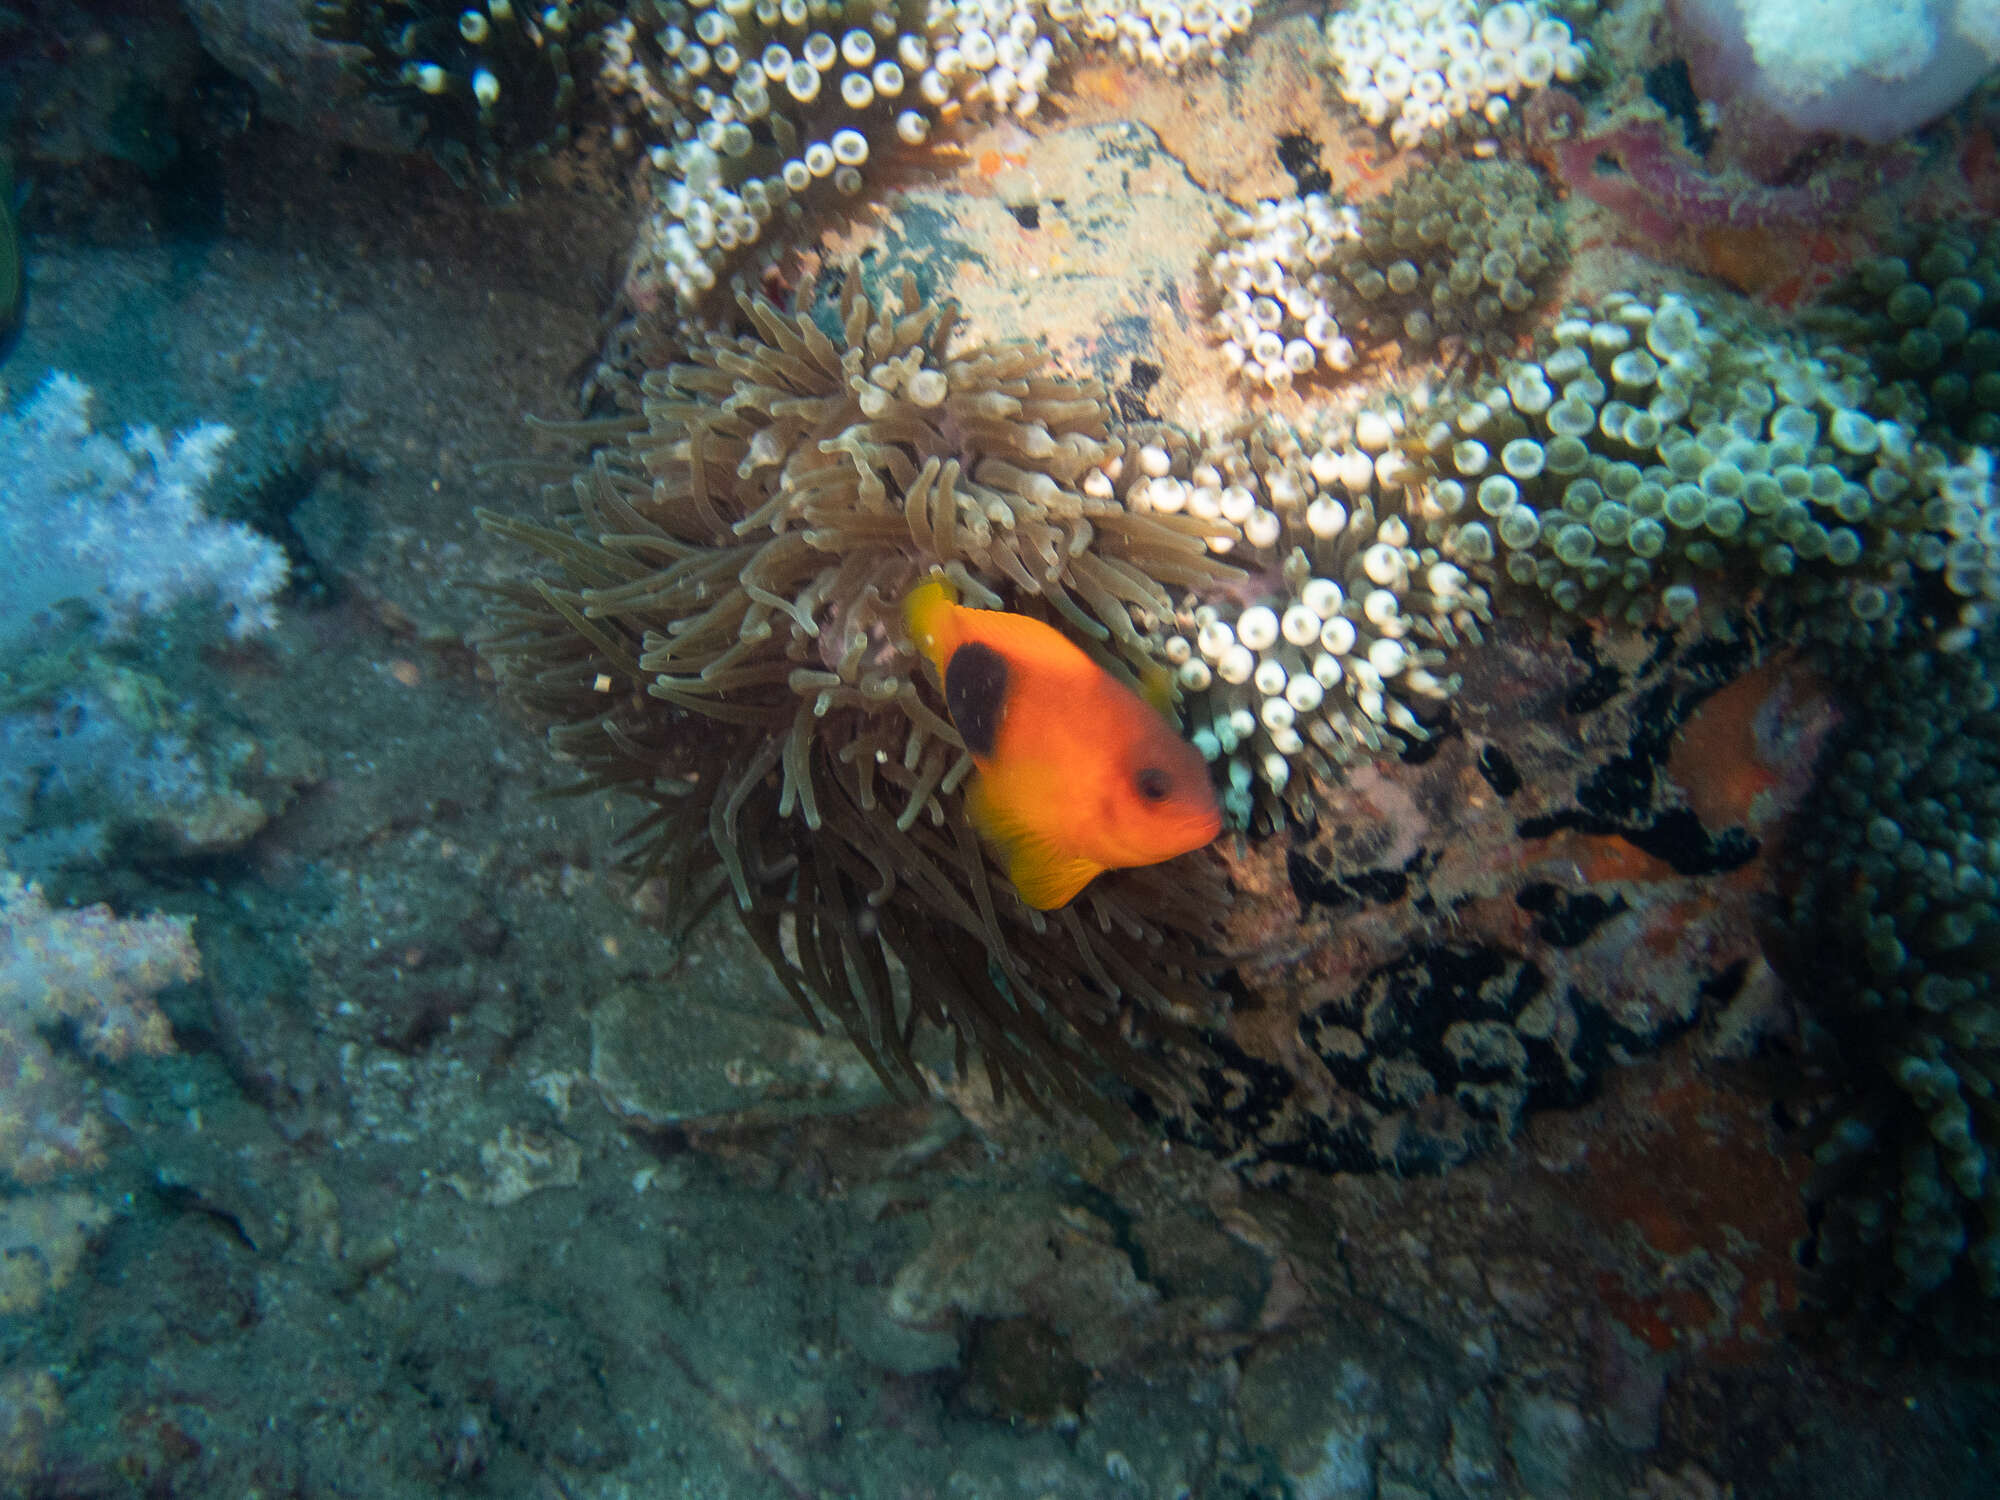 Image of Red saddleback anemonefish